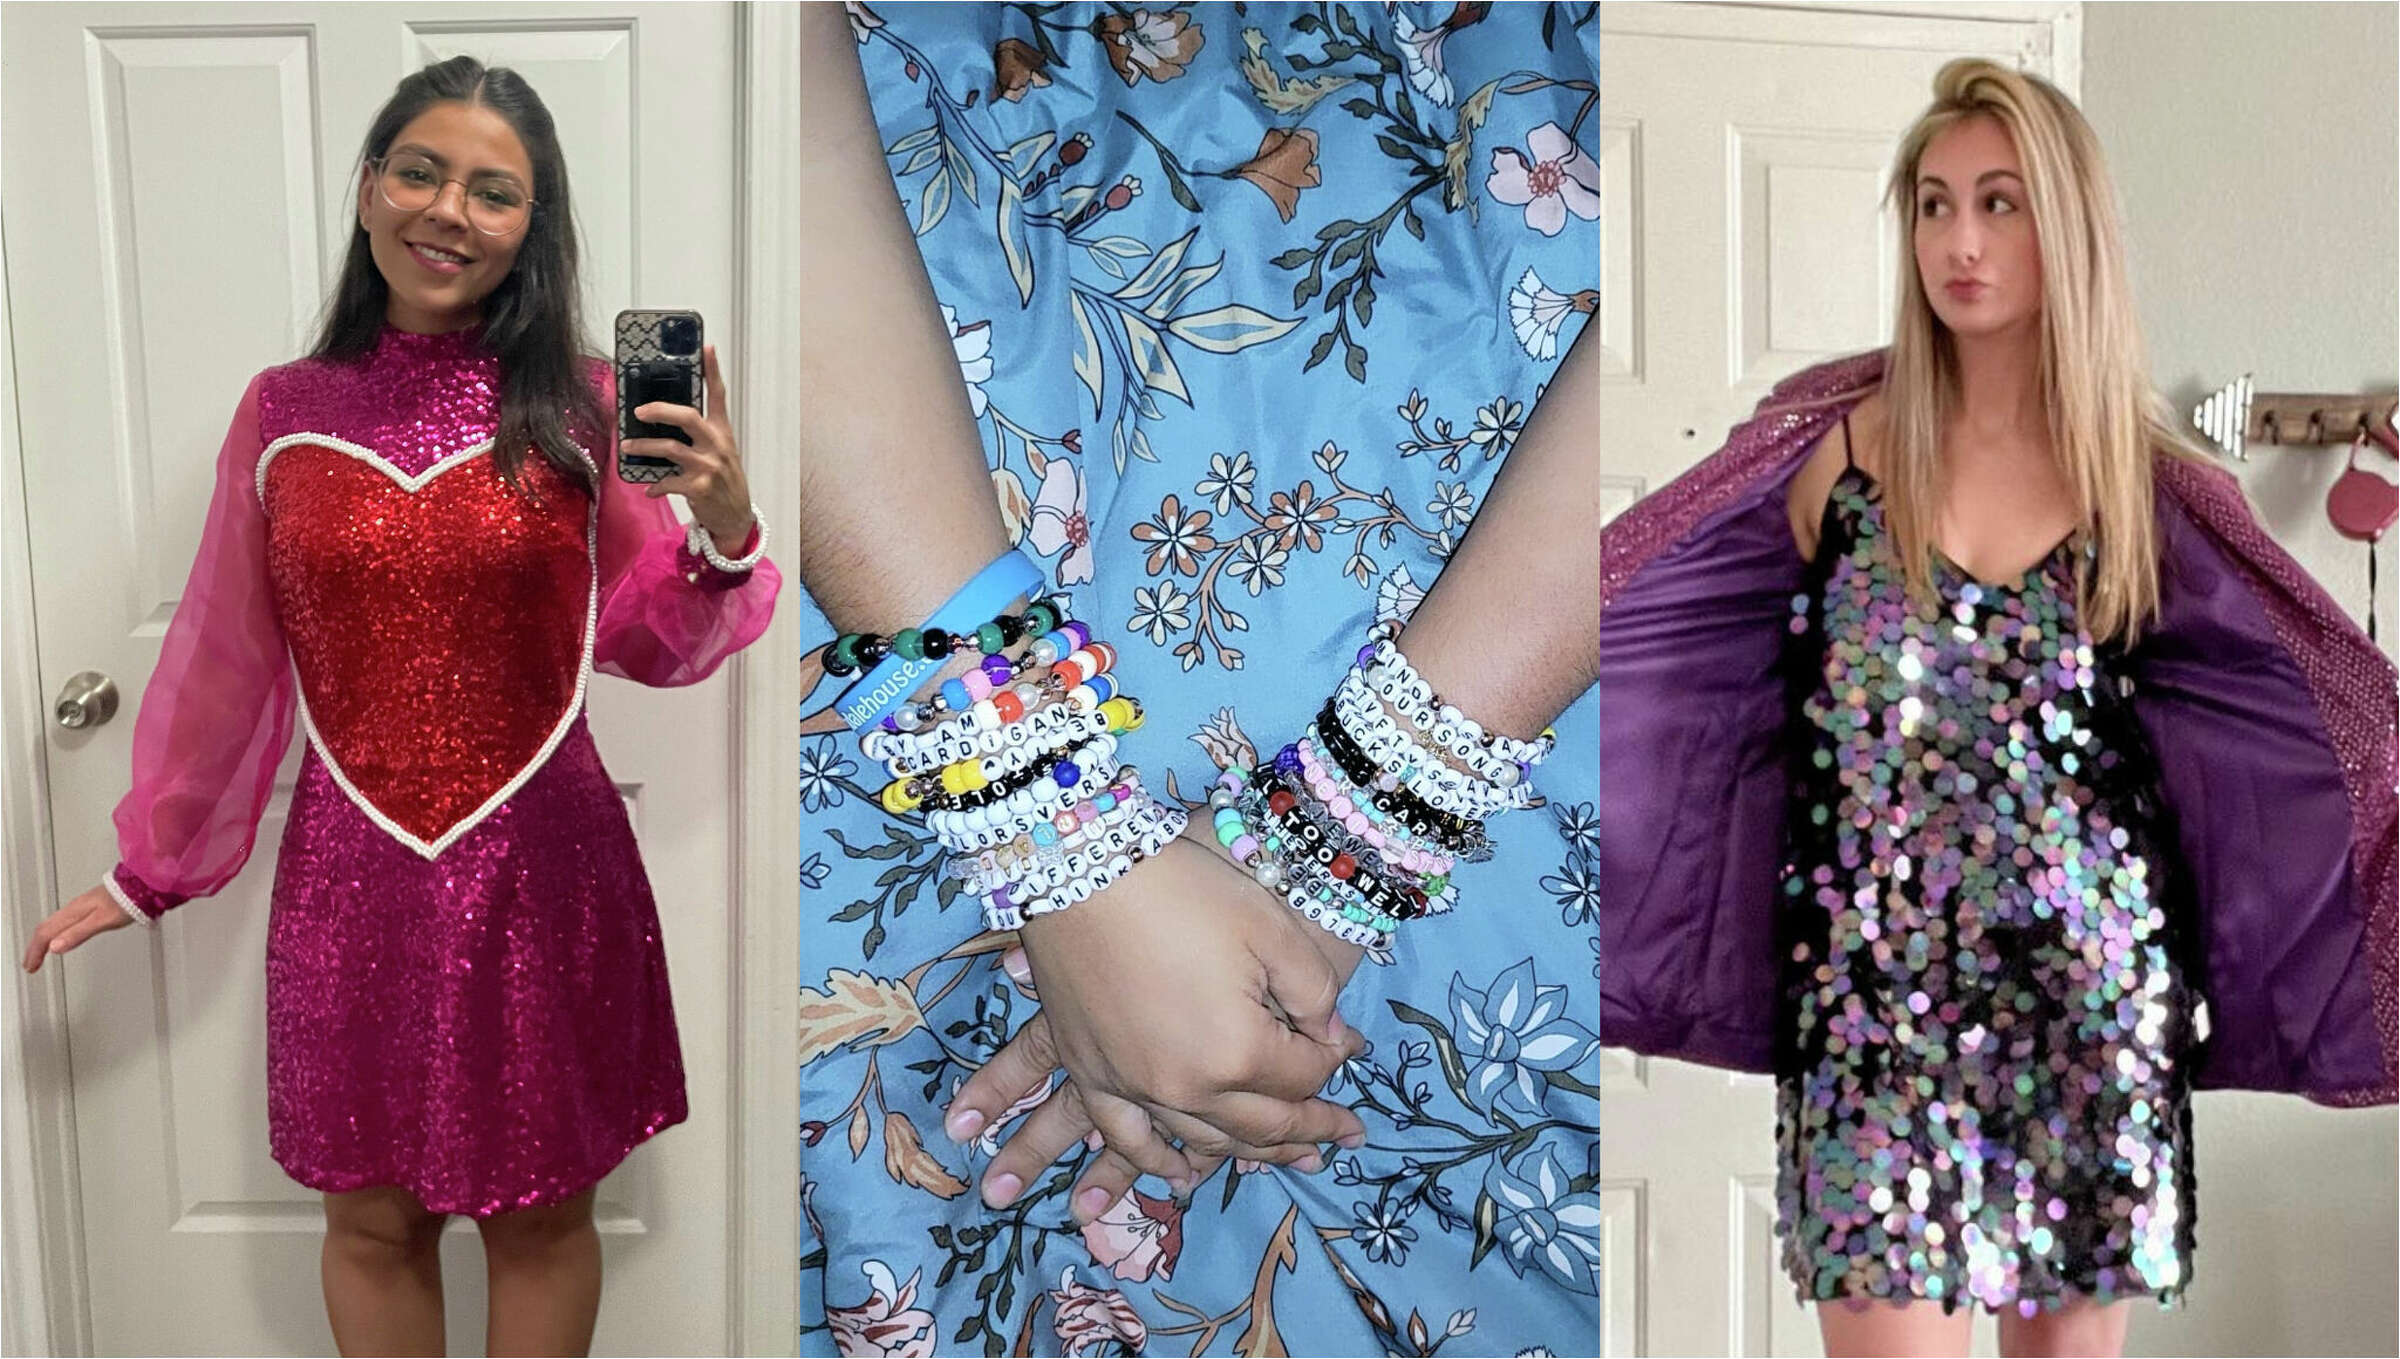 The Swiftie who wore a 13-pound dress made of friendship bracelets